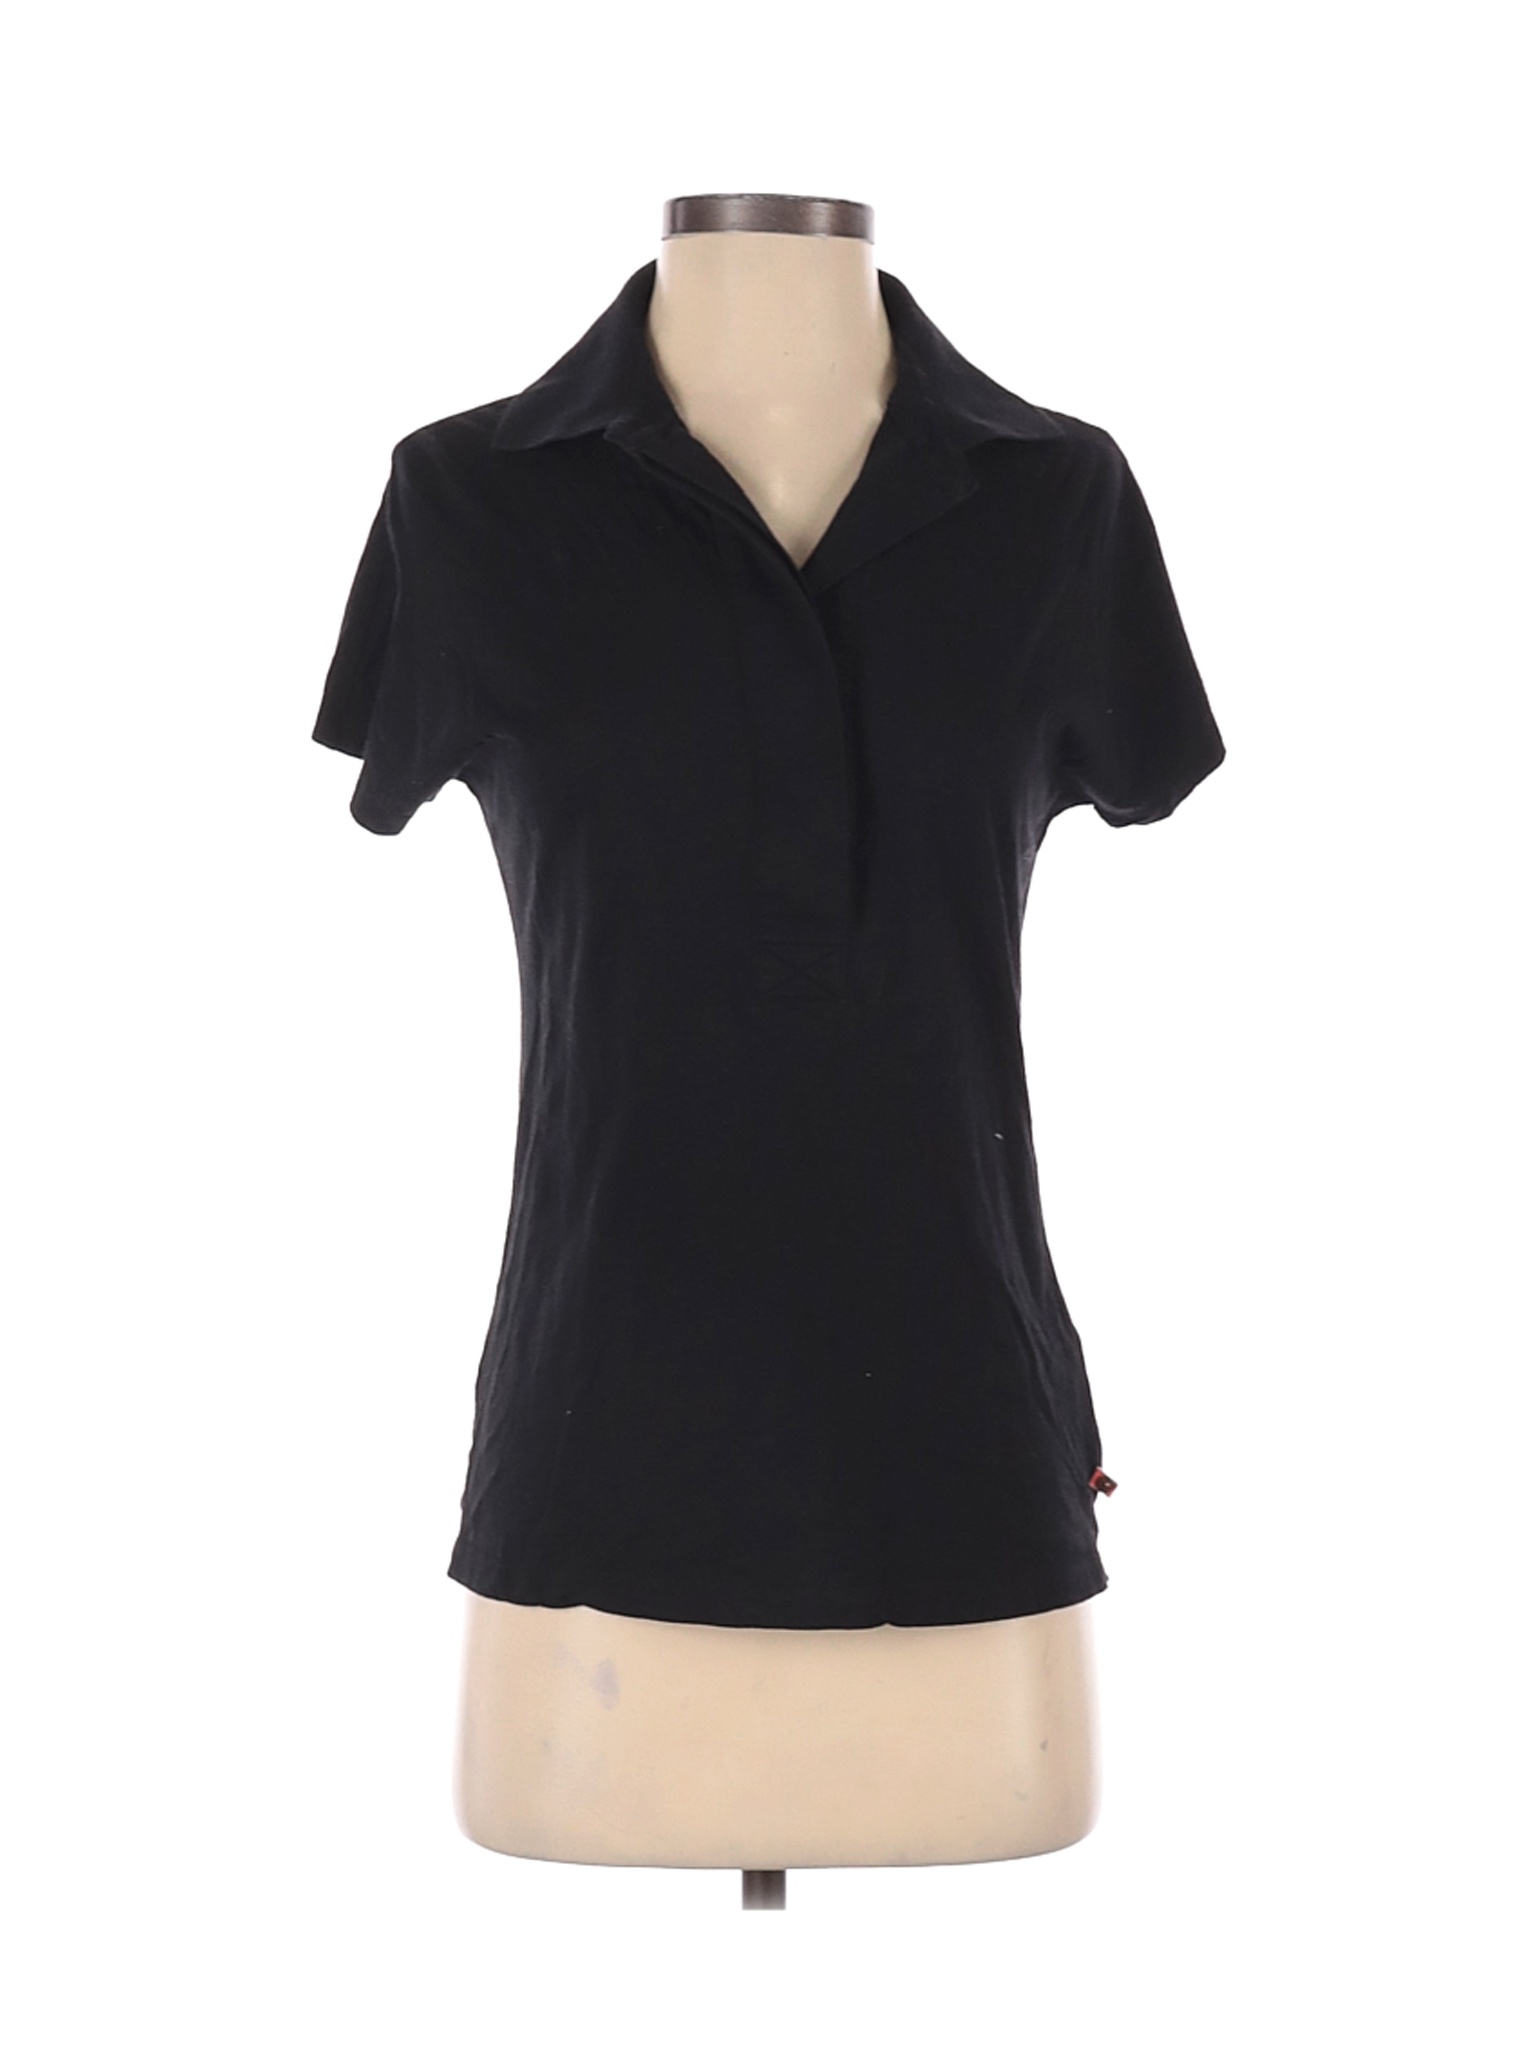 BOSS by HUGO BOSS Women Black Short Sleeve Polo S | eBay